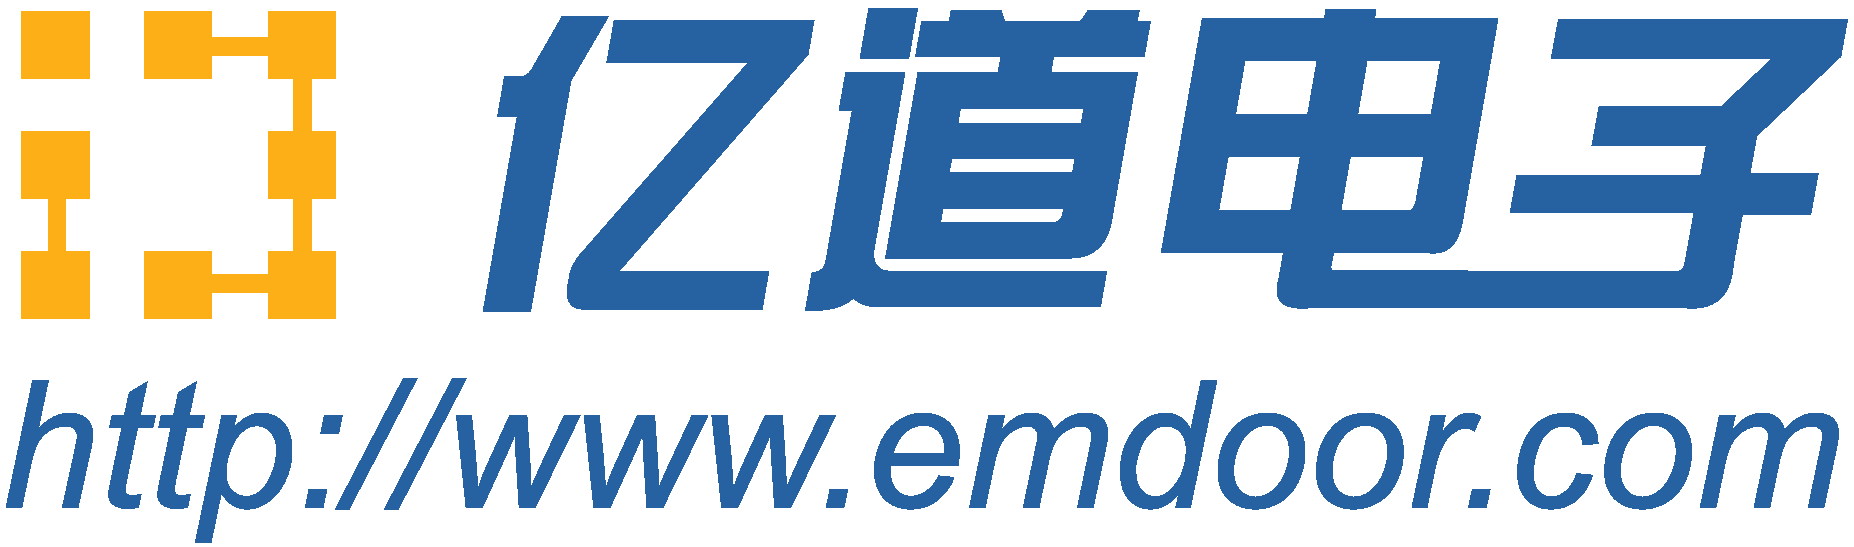 Emdoor Electronic Technology Co Ltd - Shenzhen